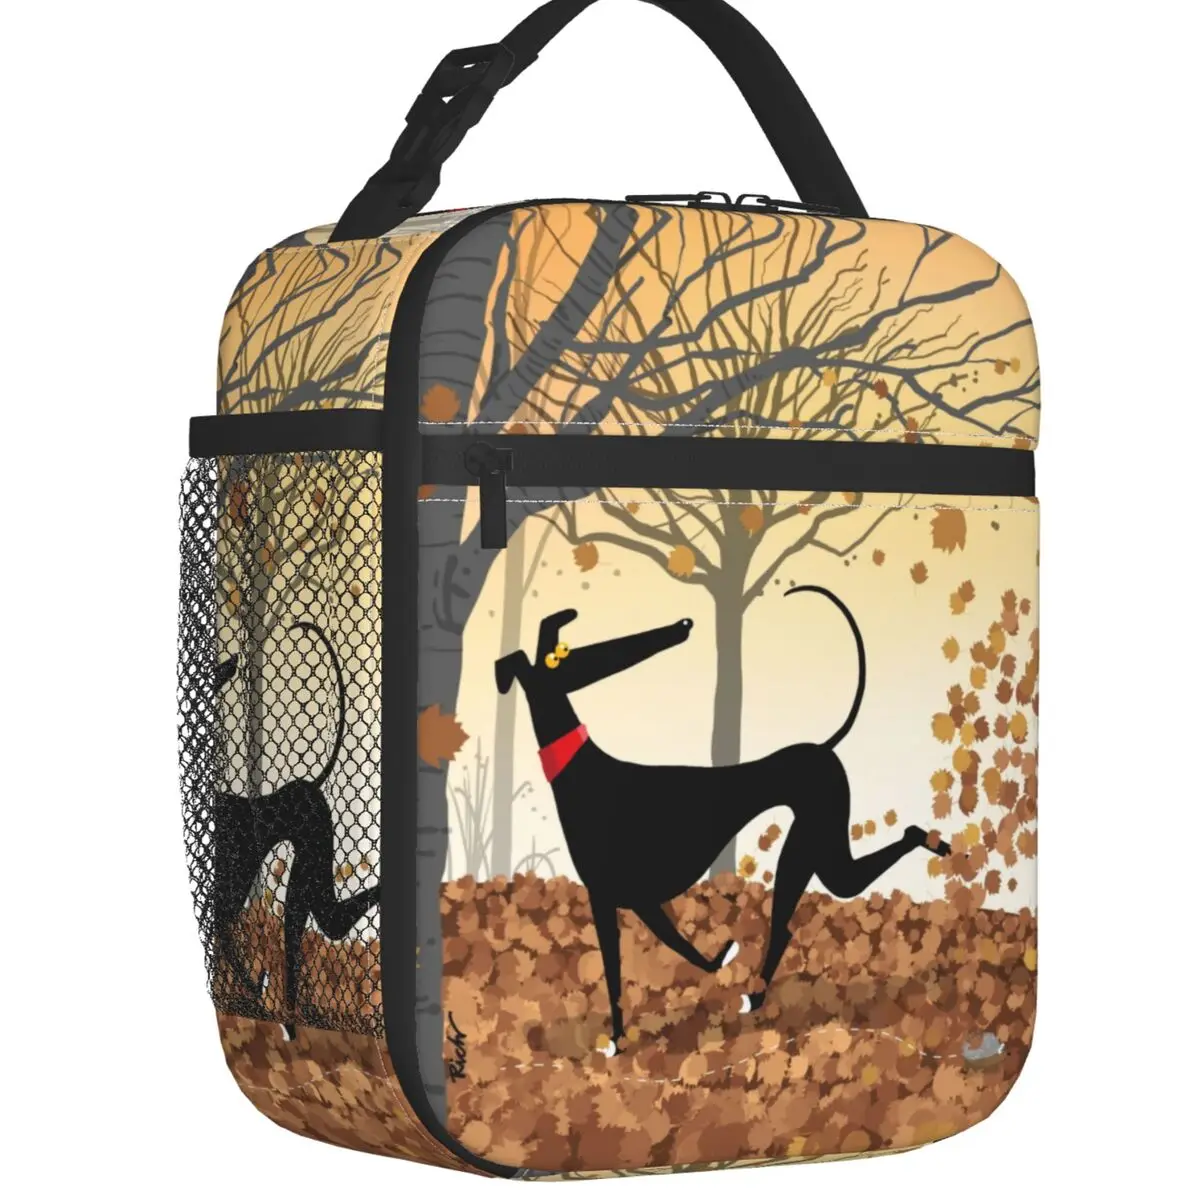 Autumn Hound Insulated Lunch Bag for Work School Greyhound Whippet Dog Waterproof Thermal Cooler Lunch Box Women Children